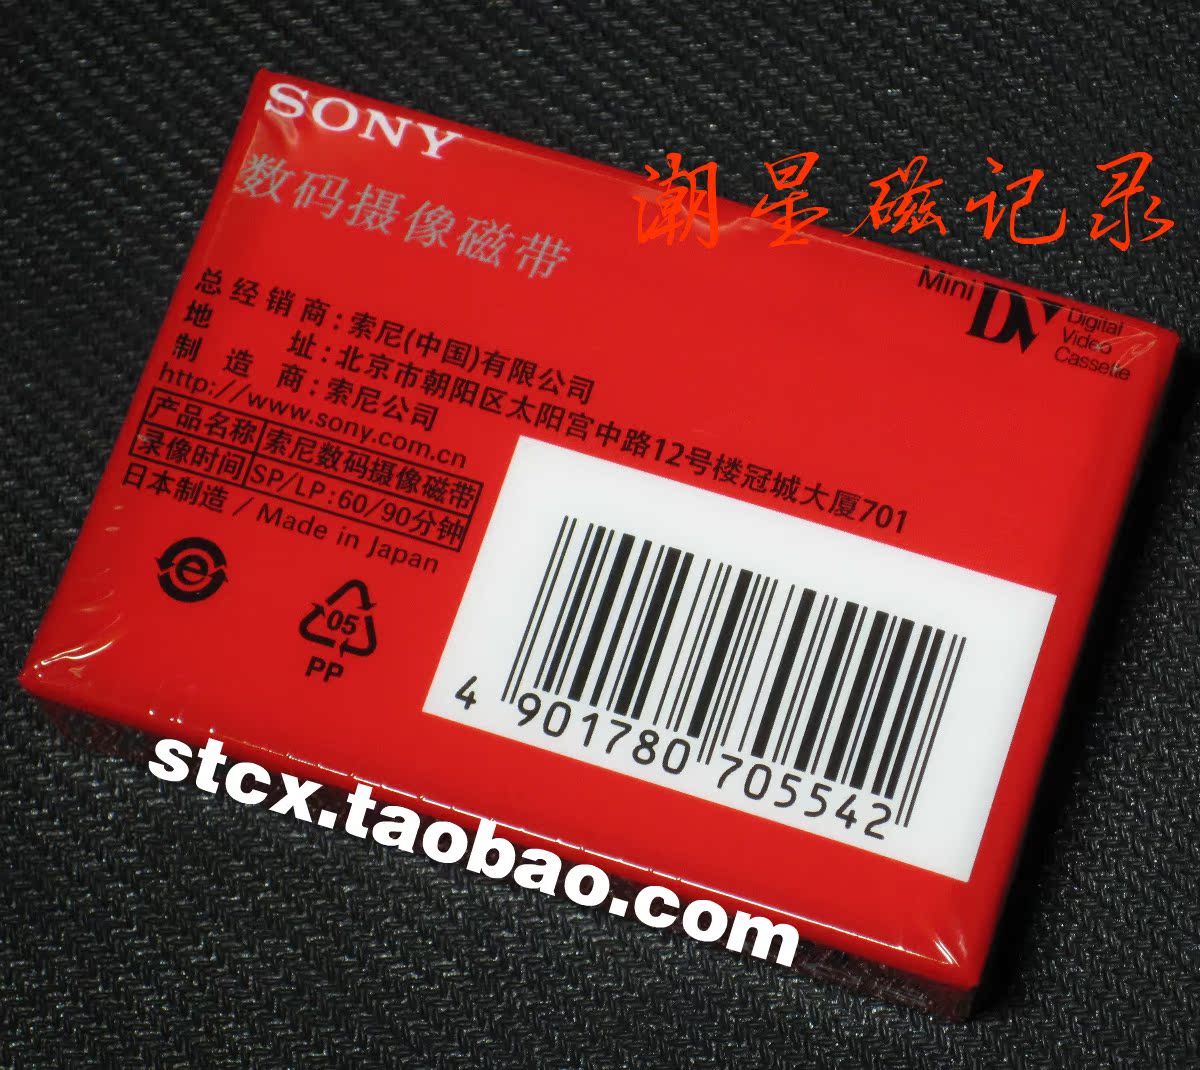 3 88 Sony Dv Cassette Spot Sony Video Tape And Dv Video Tape From Best Taobao Agent Taobao International International Ecommerce Newbecca Com